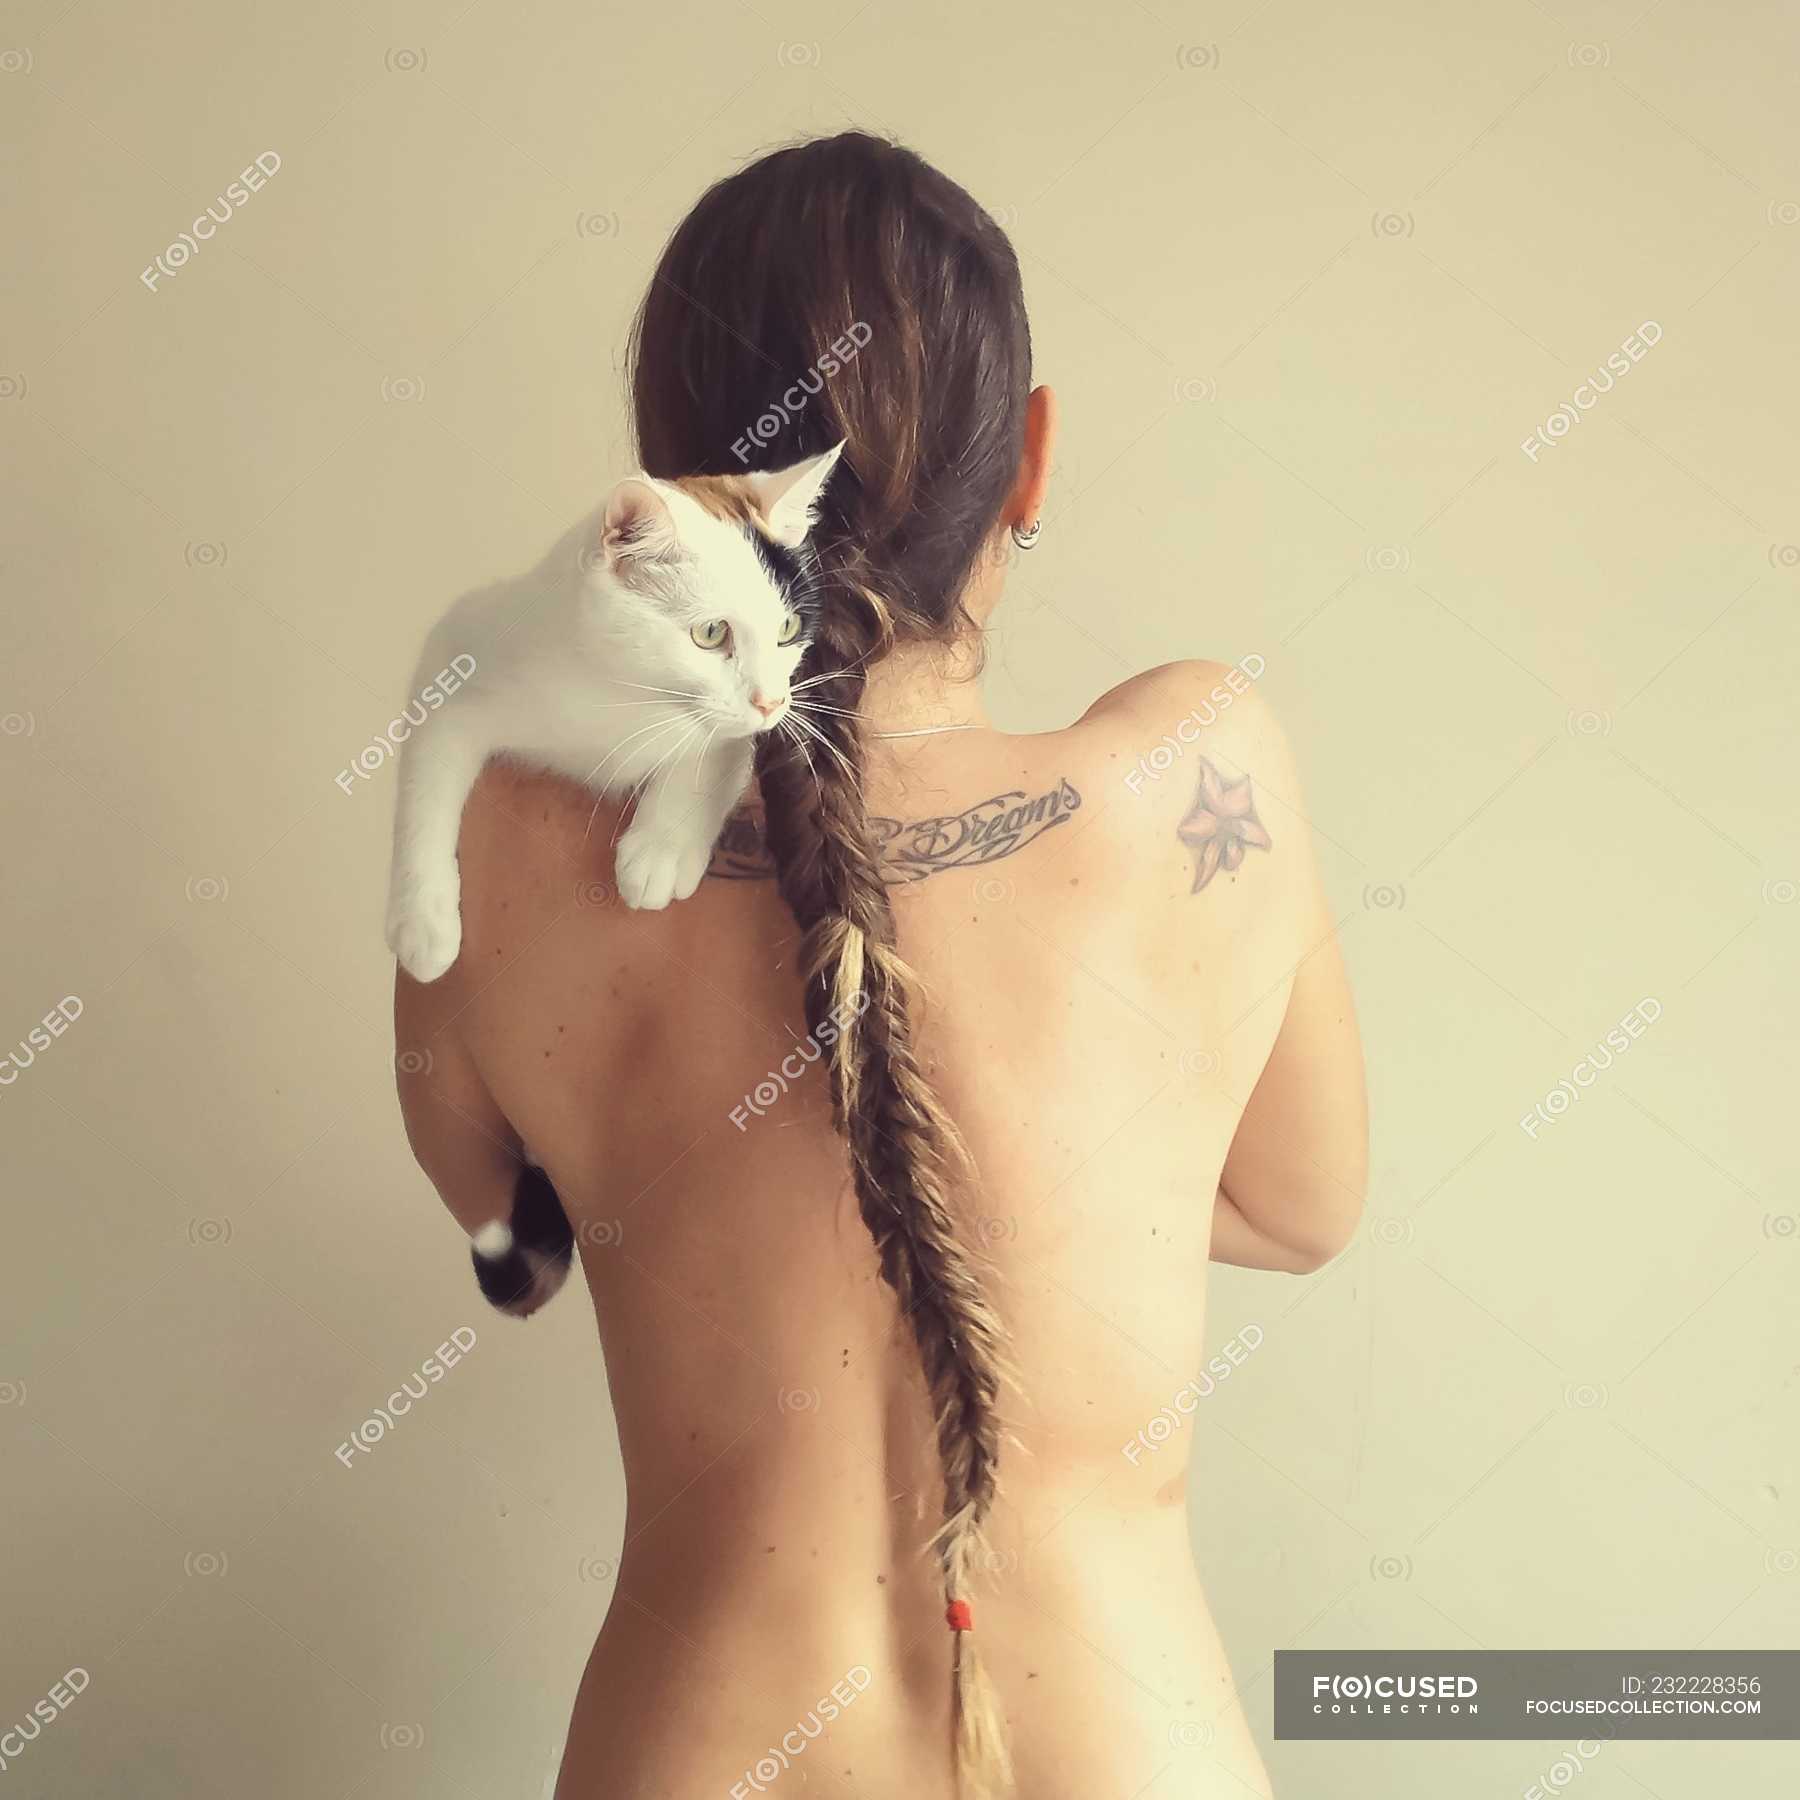 Nude space cat photos - Hot pics